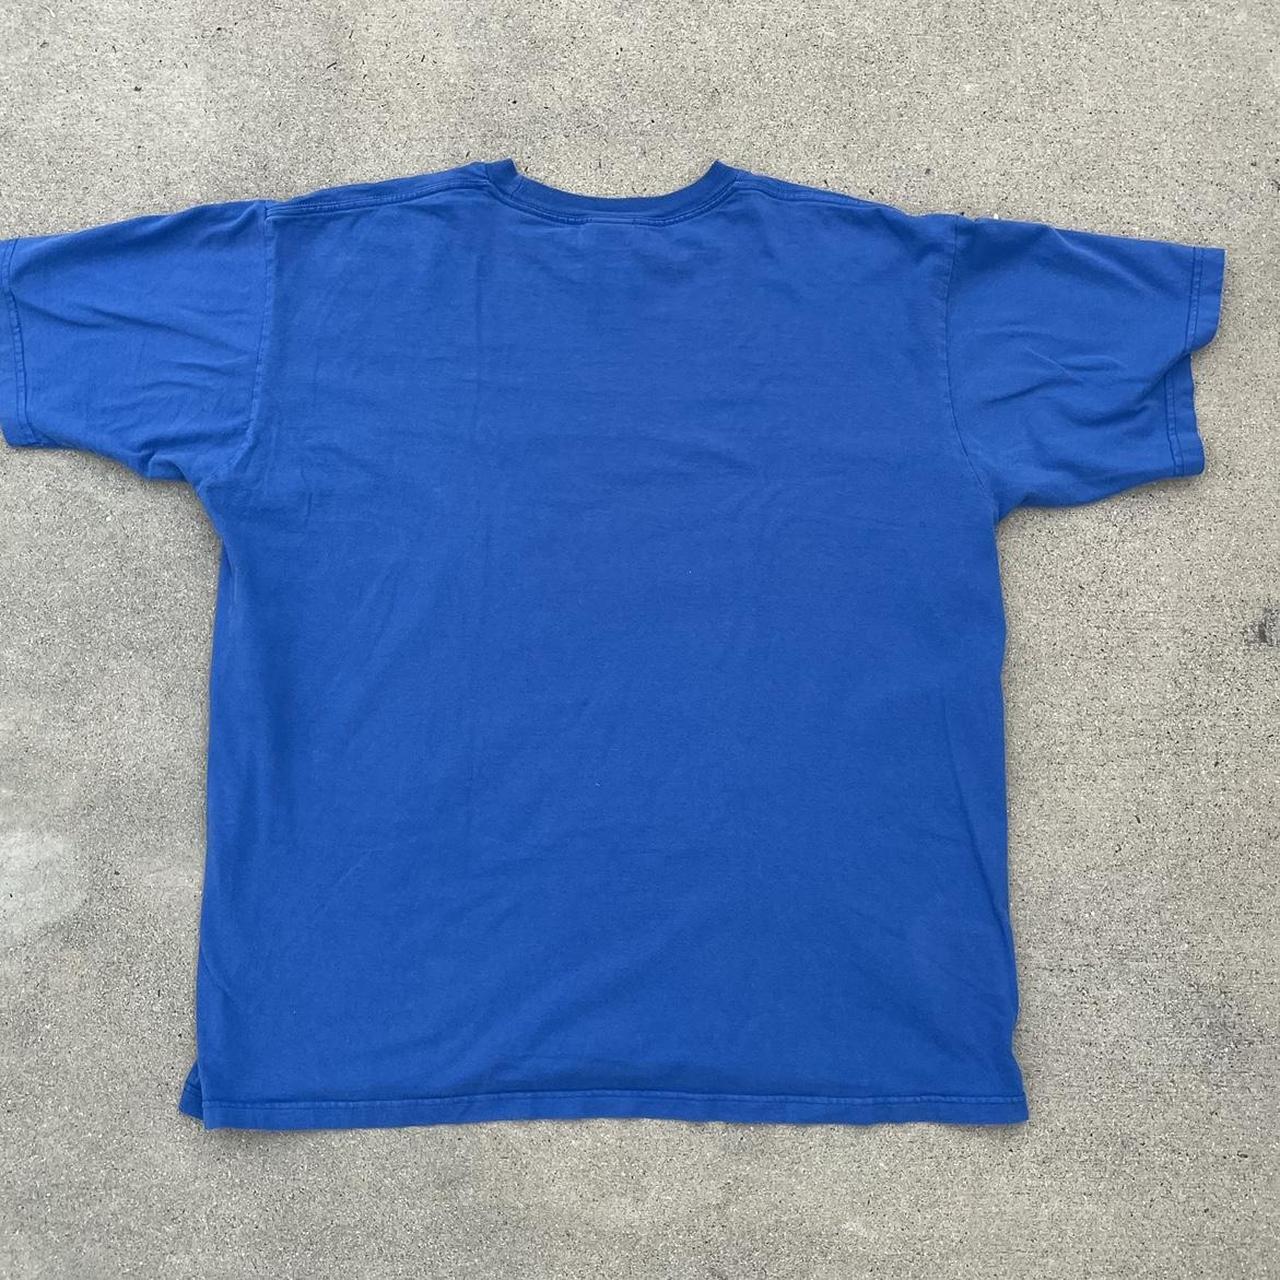 Blue North Face T-Shirt size Large - Depop